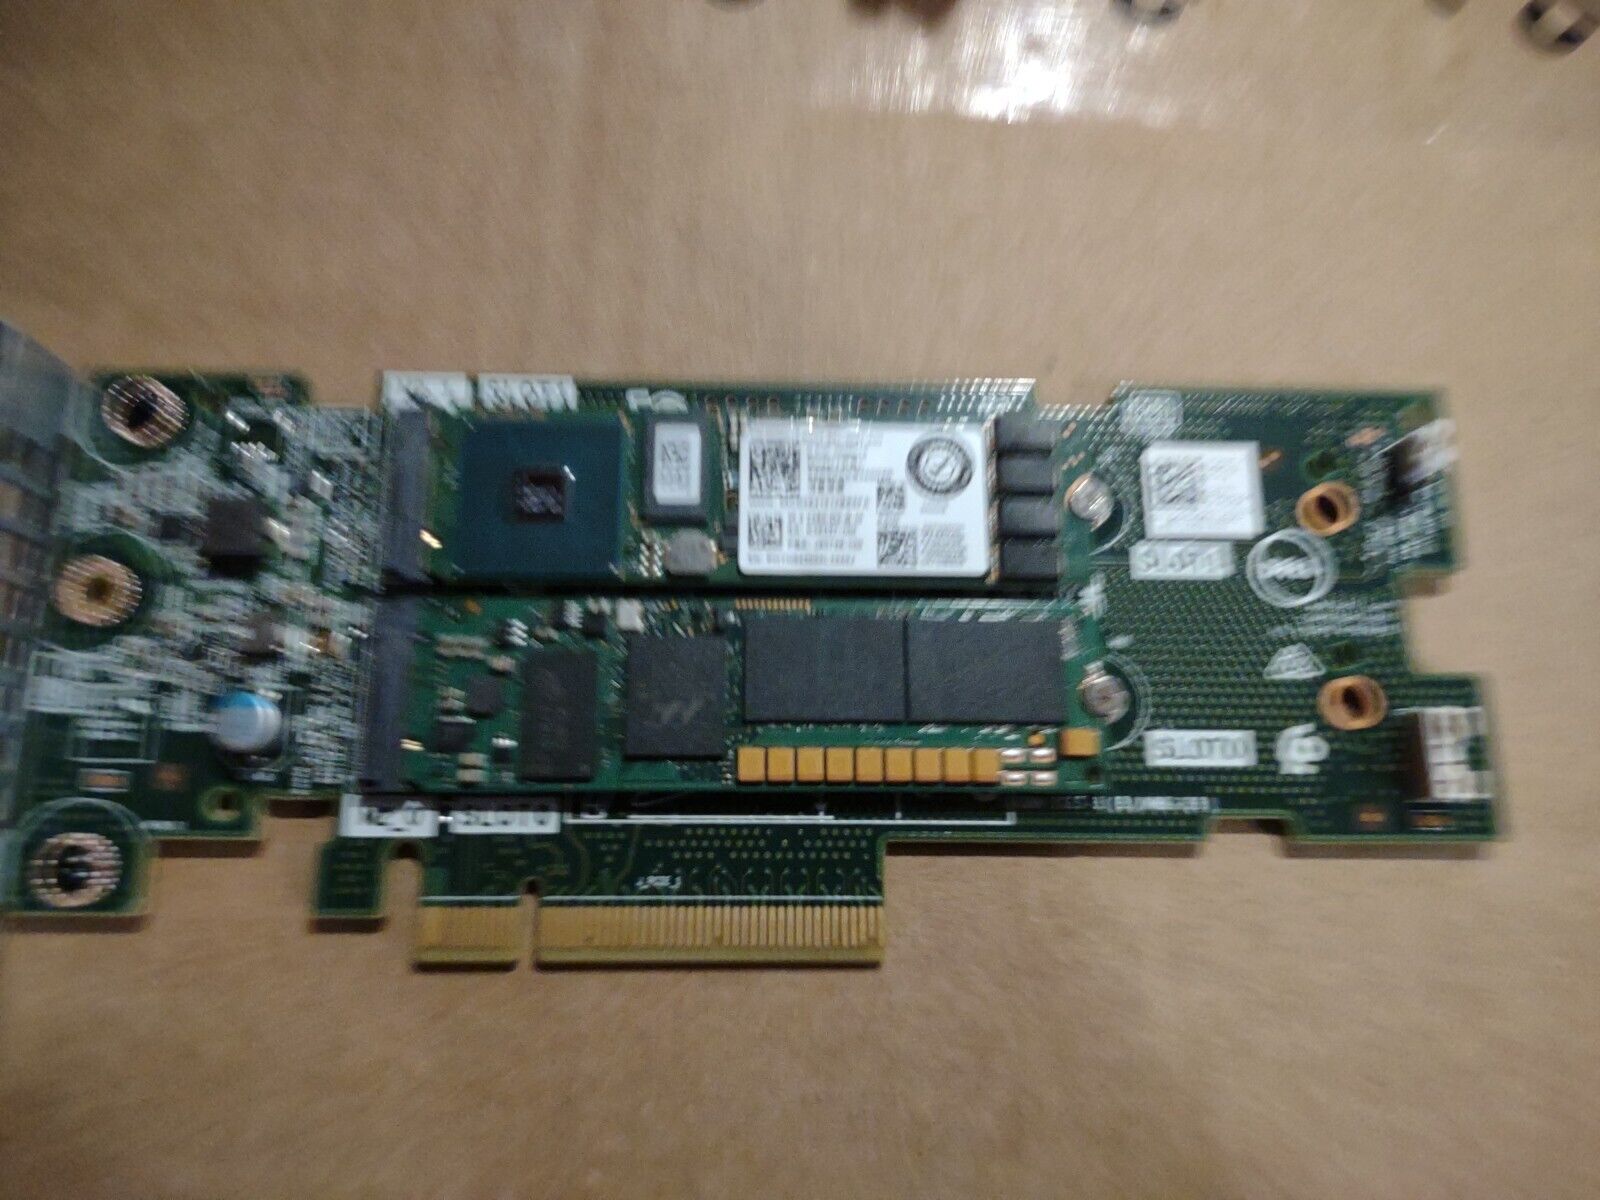 Dell K4D64 BOSS-S1 2x 240GB M.2 (480GB) Boot Optimized Server  PCIe Card Low Pro